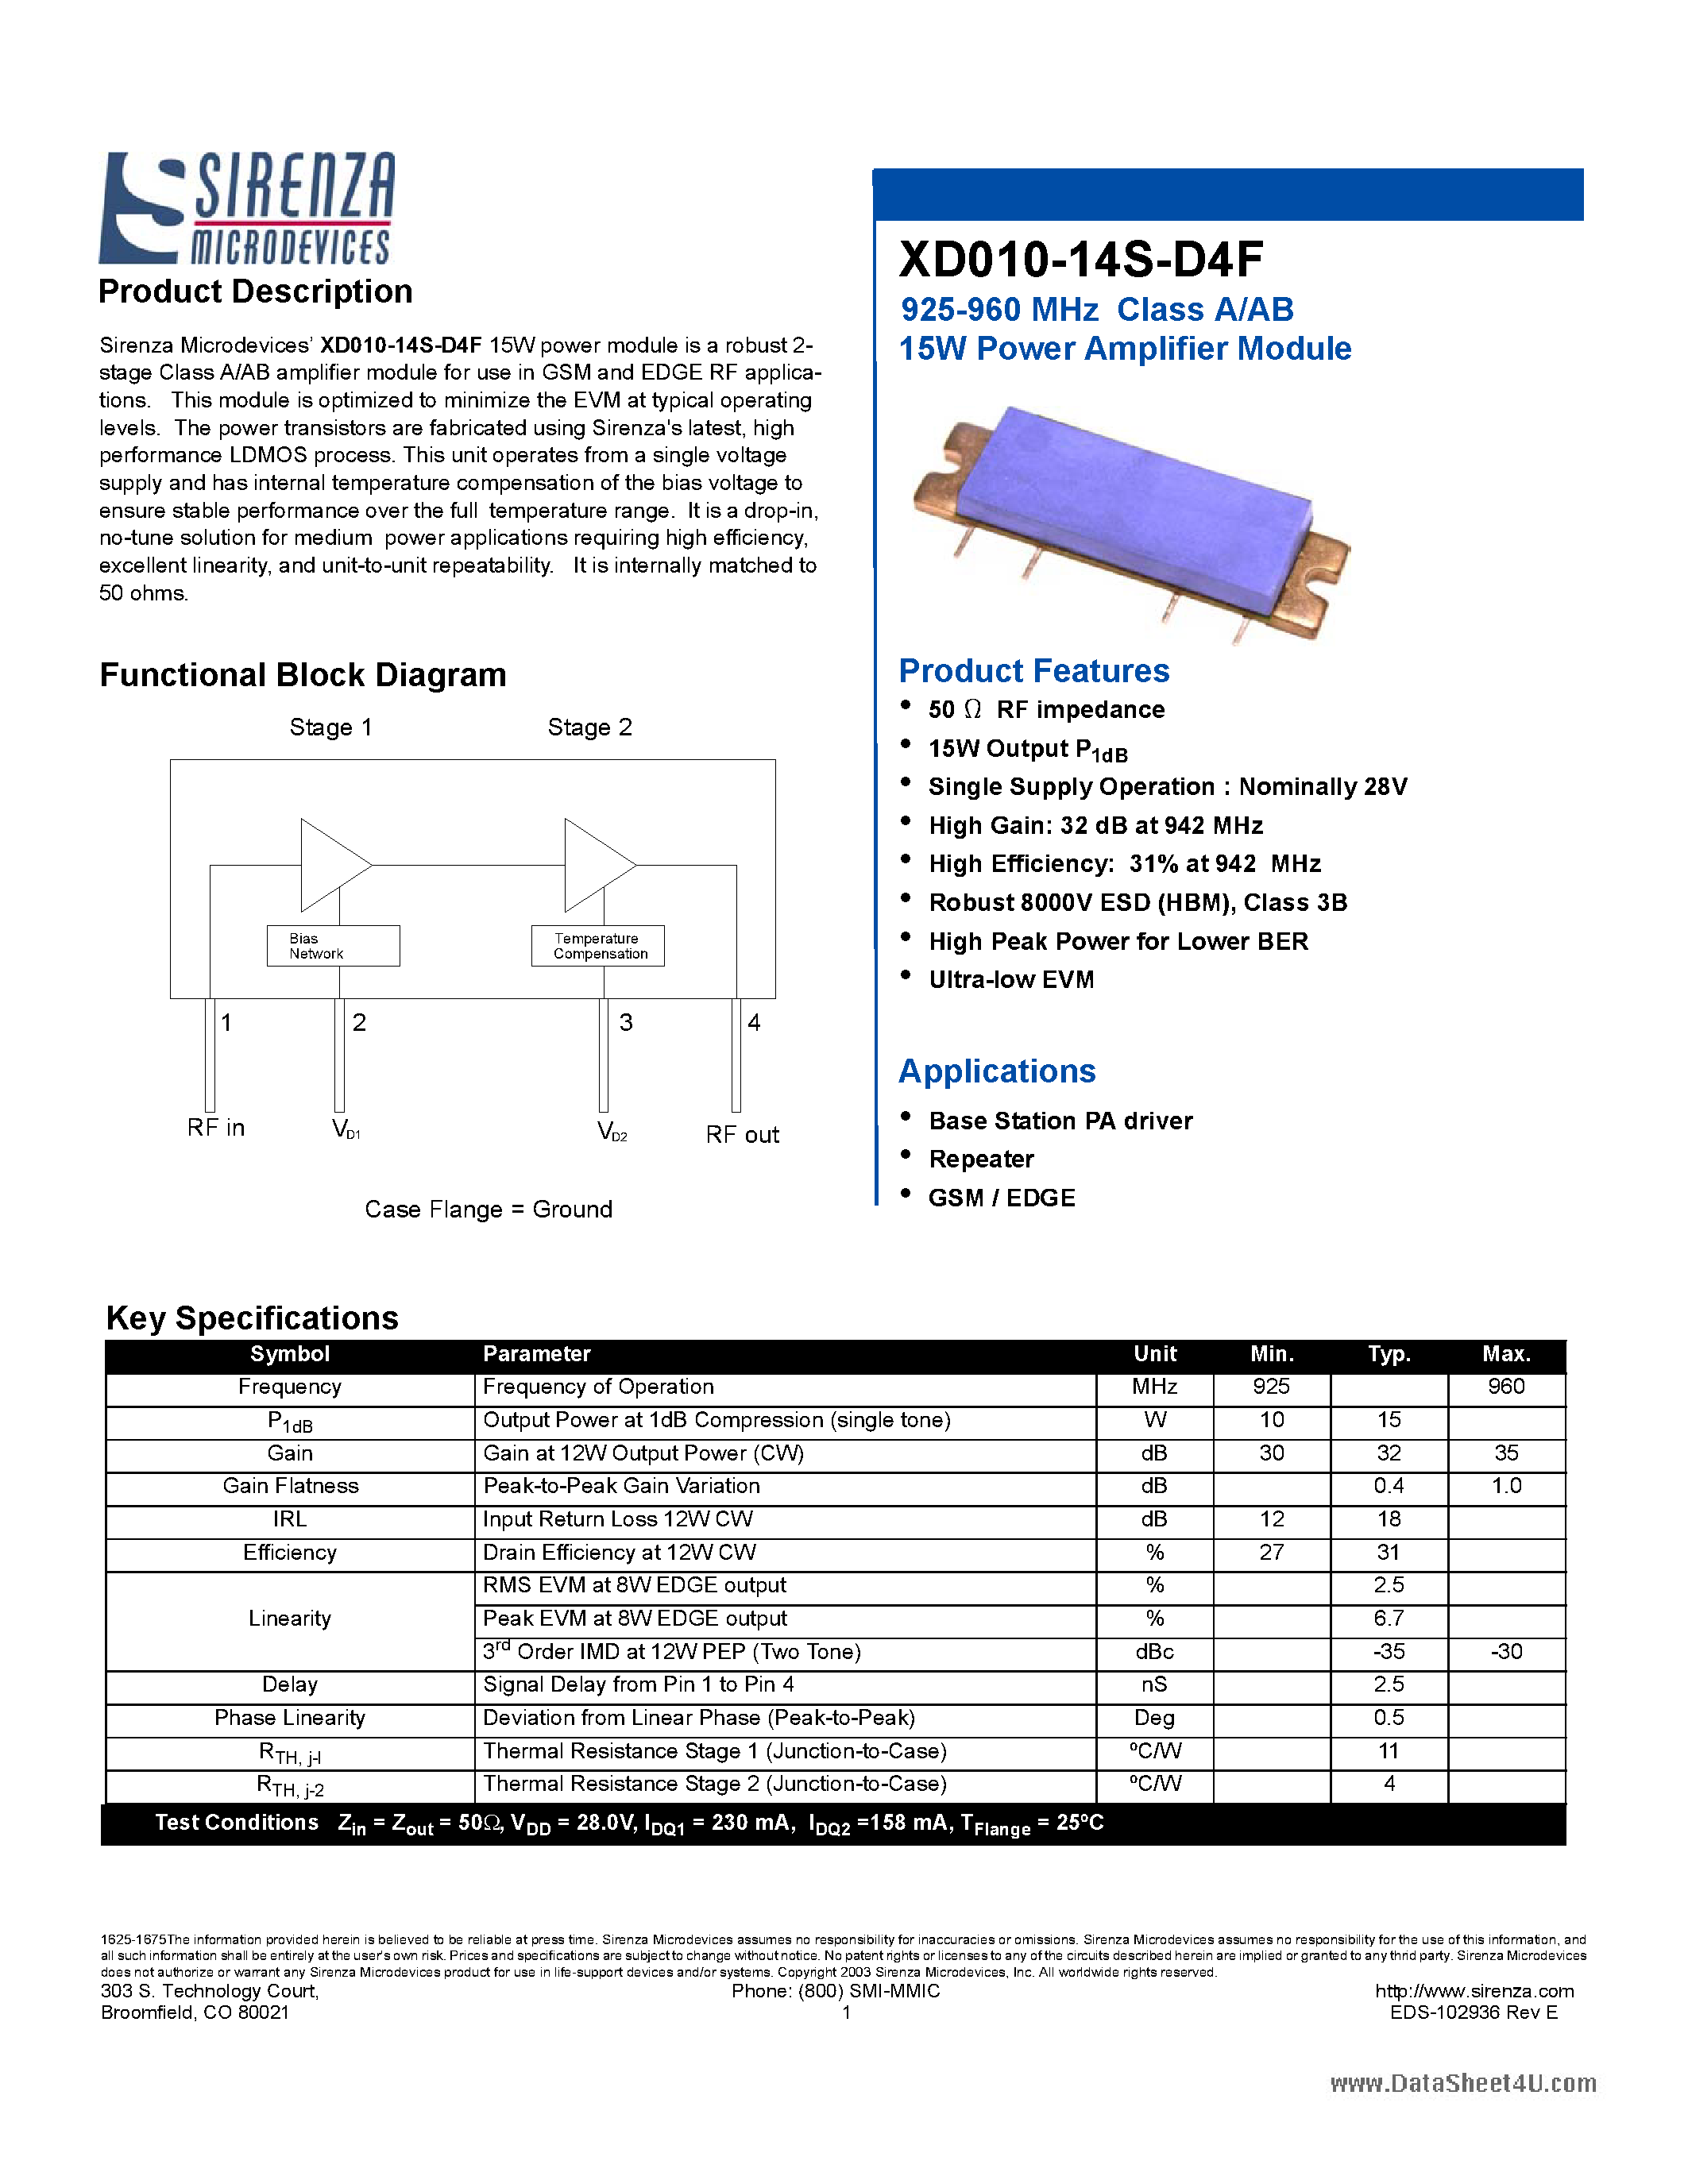 Даташит XD010-14S-D4F - Class A/AB 15W Power Amplifier Module страница 1